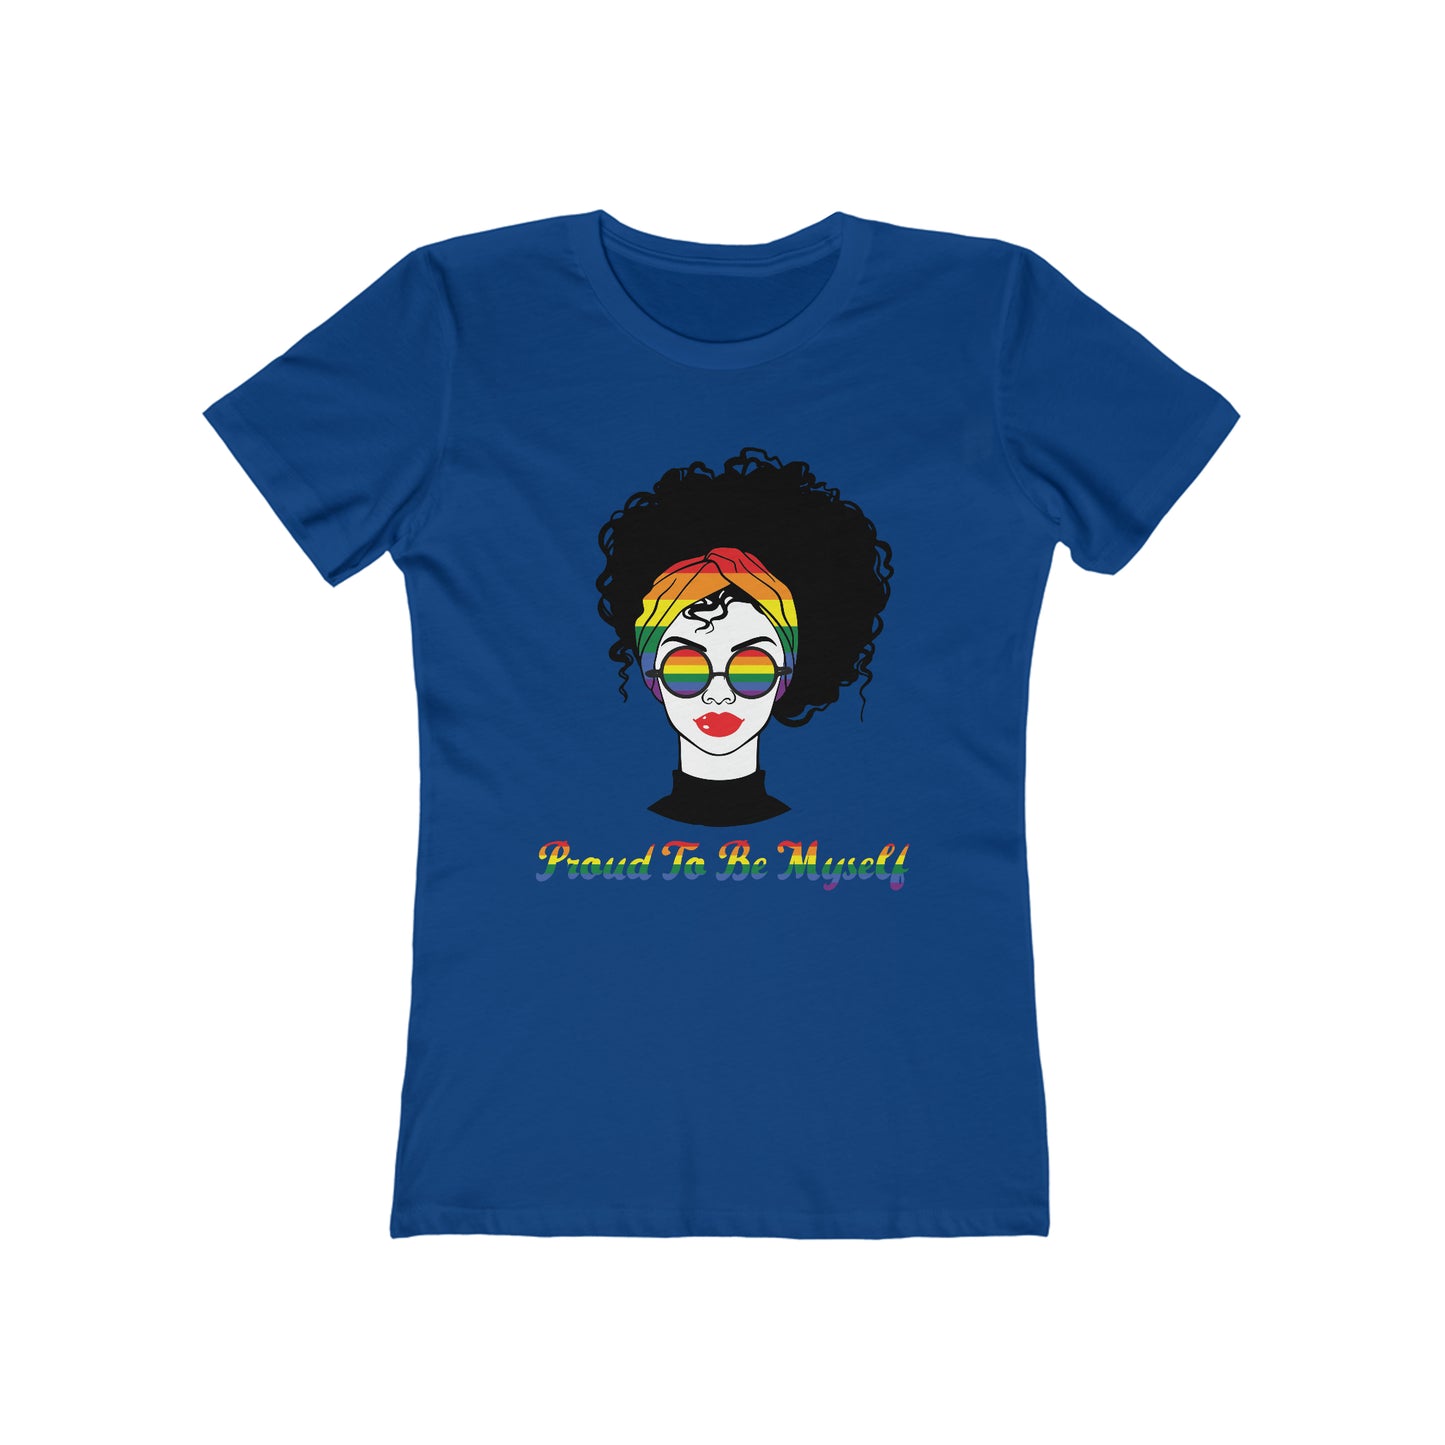 Proud to be myself - Women's T-shirt